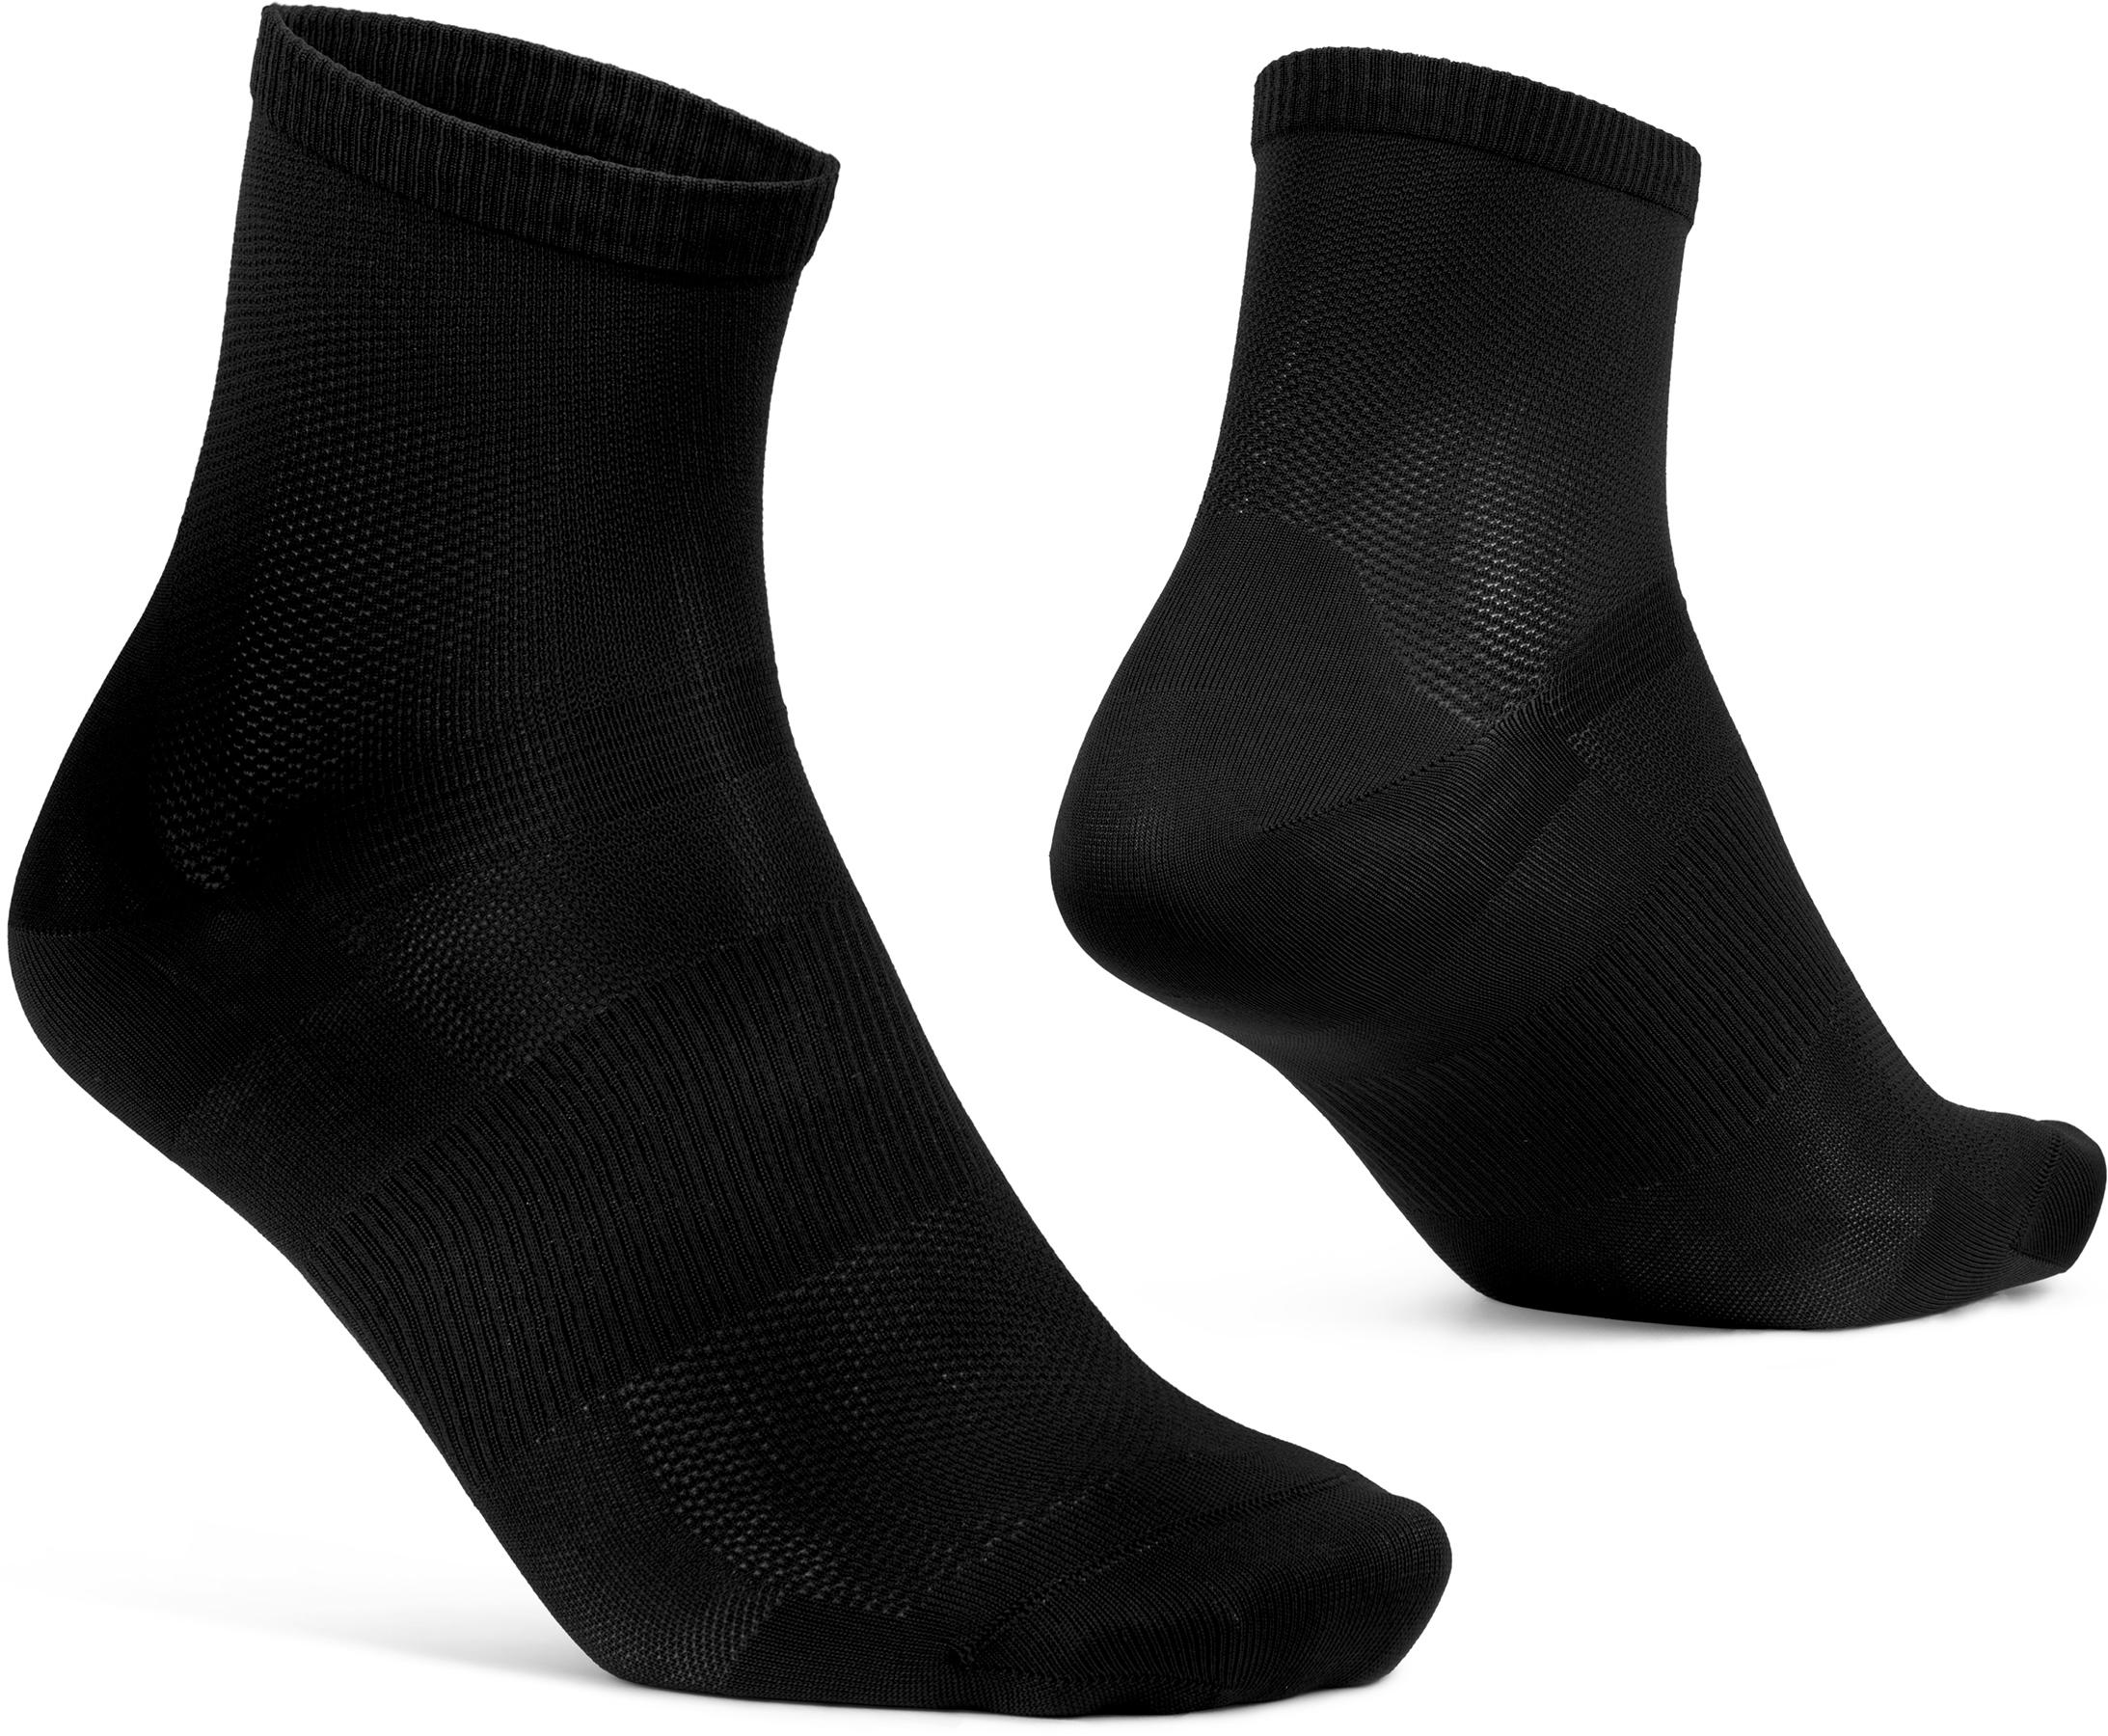 Gripgrab Lightweight Airflow Short Socks - Black